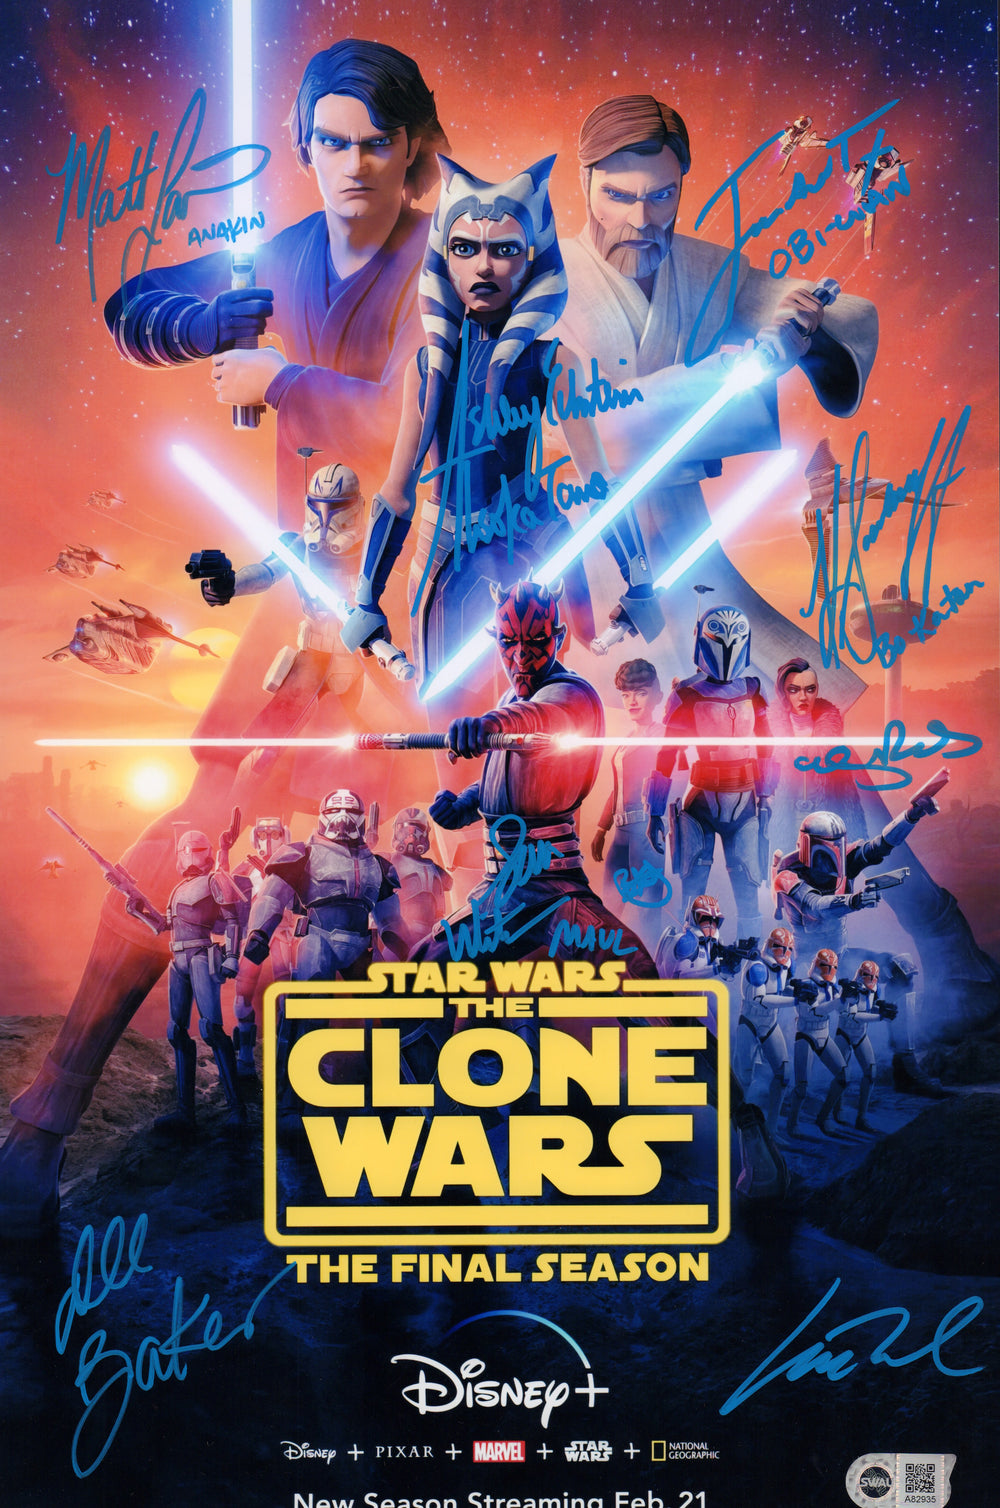 Star Wars: The Clone Wars 11x17 Mini Poster (SWAU) Cast Signed by Ashley Eckstein, James Arnold Taylor, Matt Lanter, Katee Sackhoff, Brigitte Kali, Dee Baker, Elizabeth Rodriguez, Matt Wood, & Sam Witwer